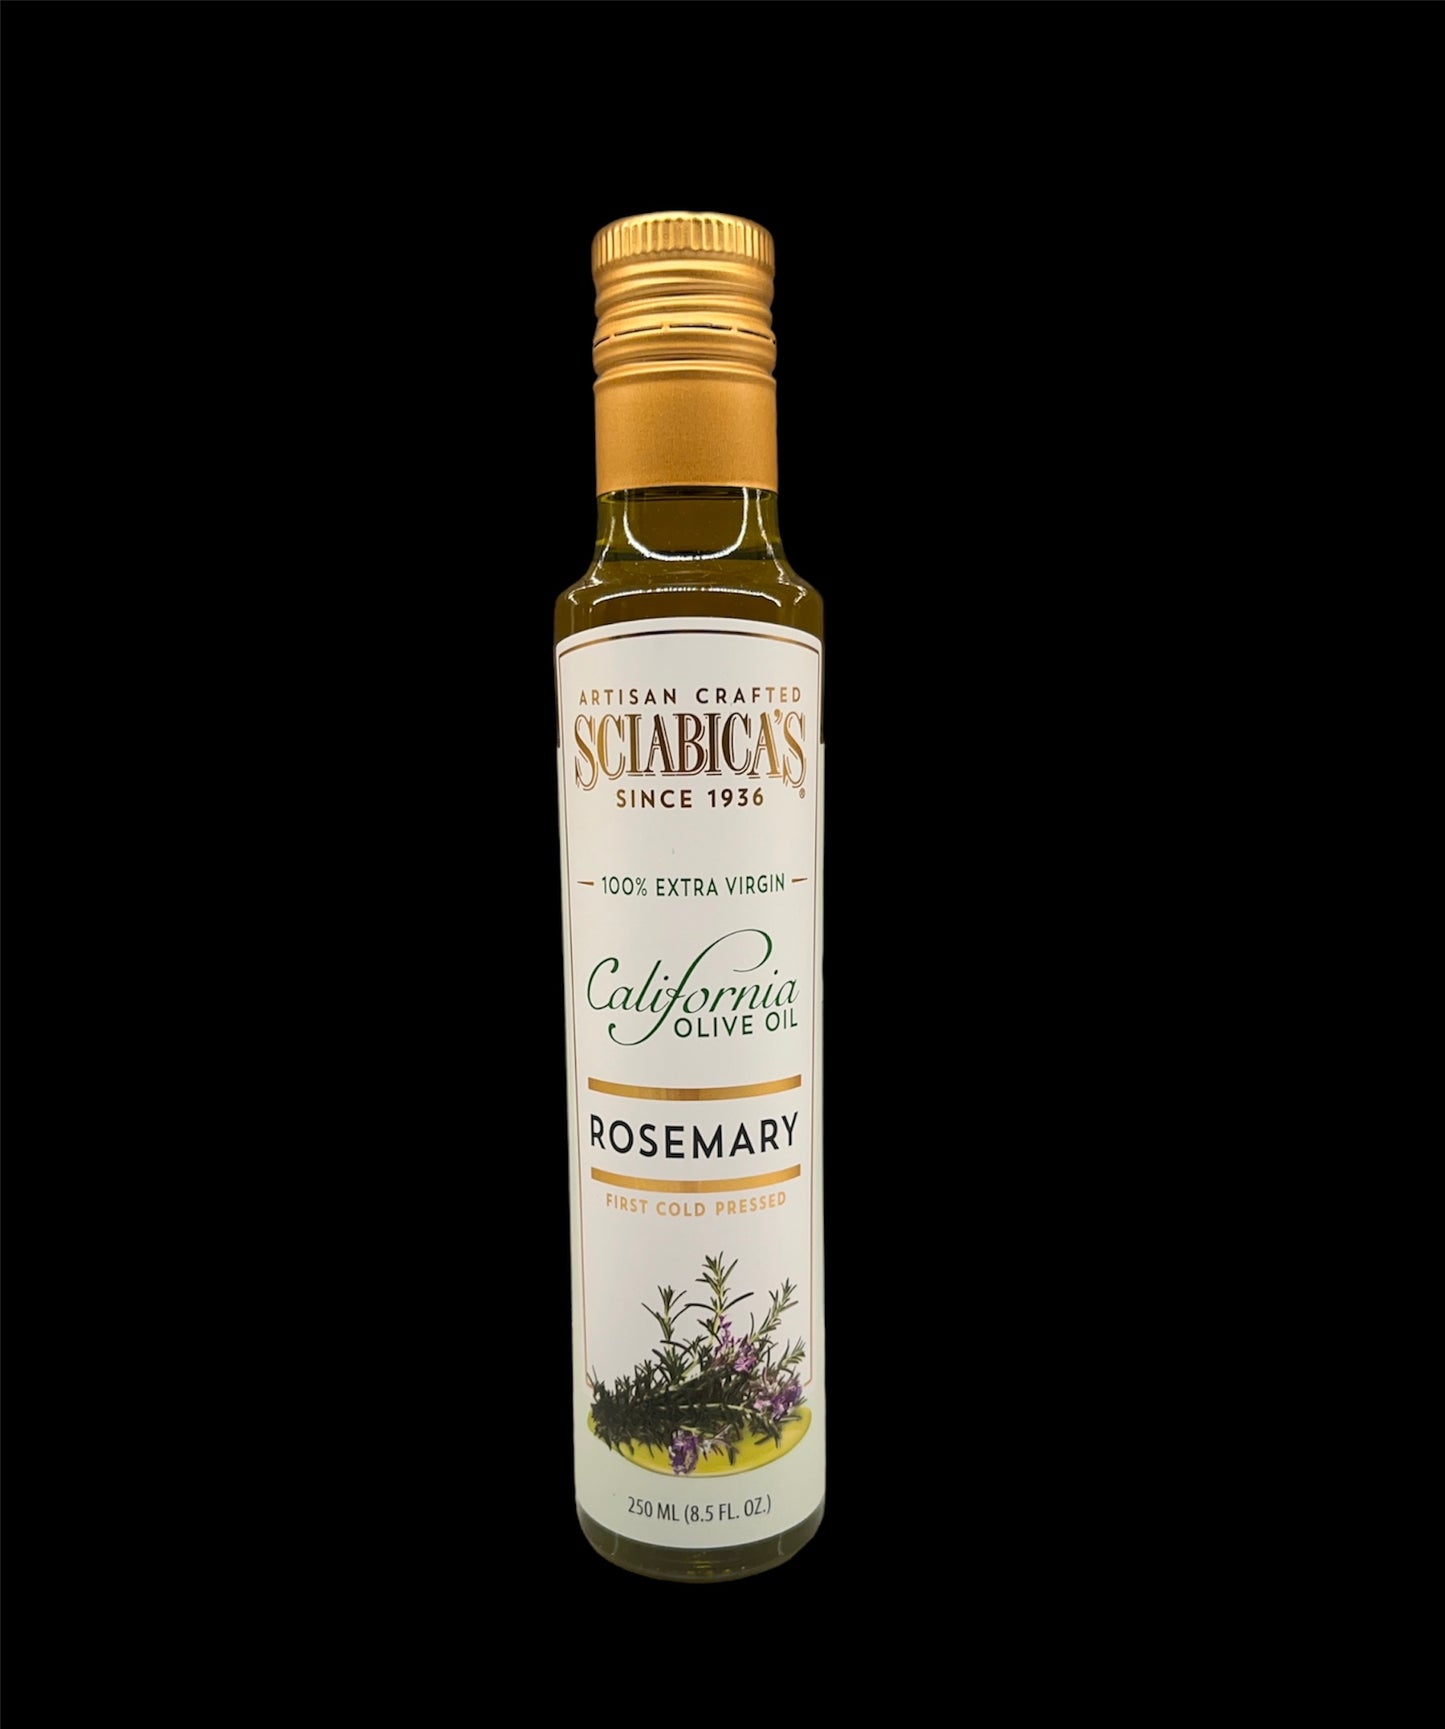 Sciabica's Rosemary Olive Oil